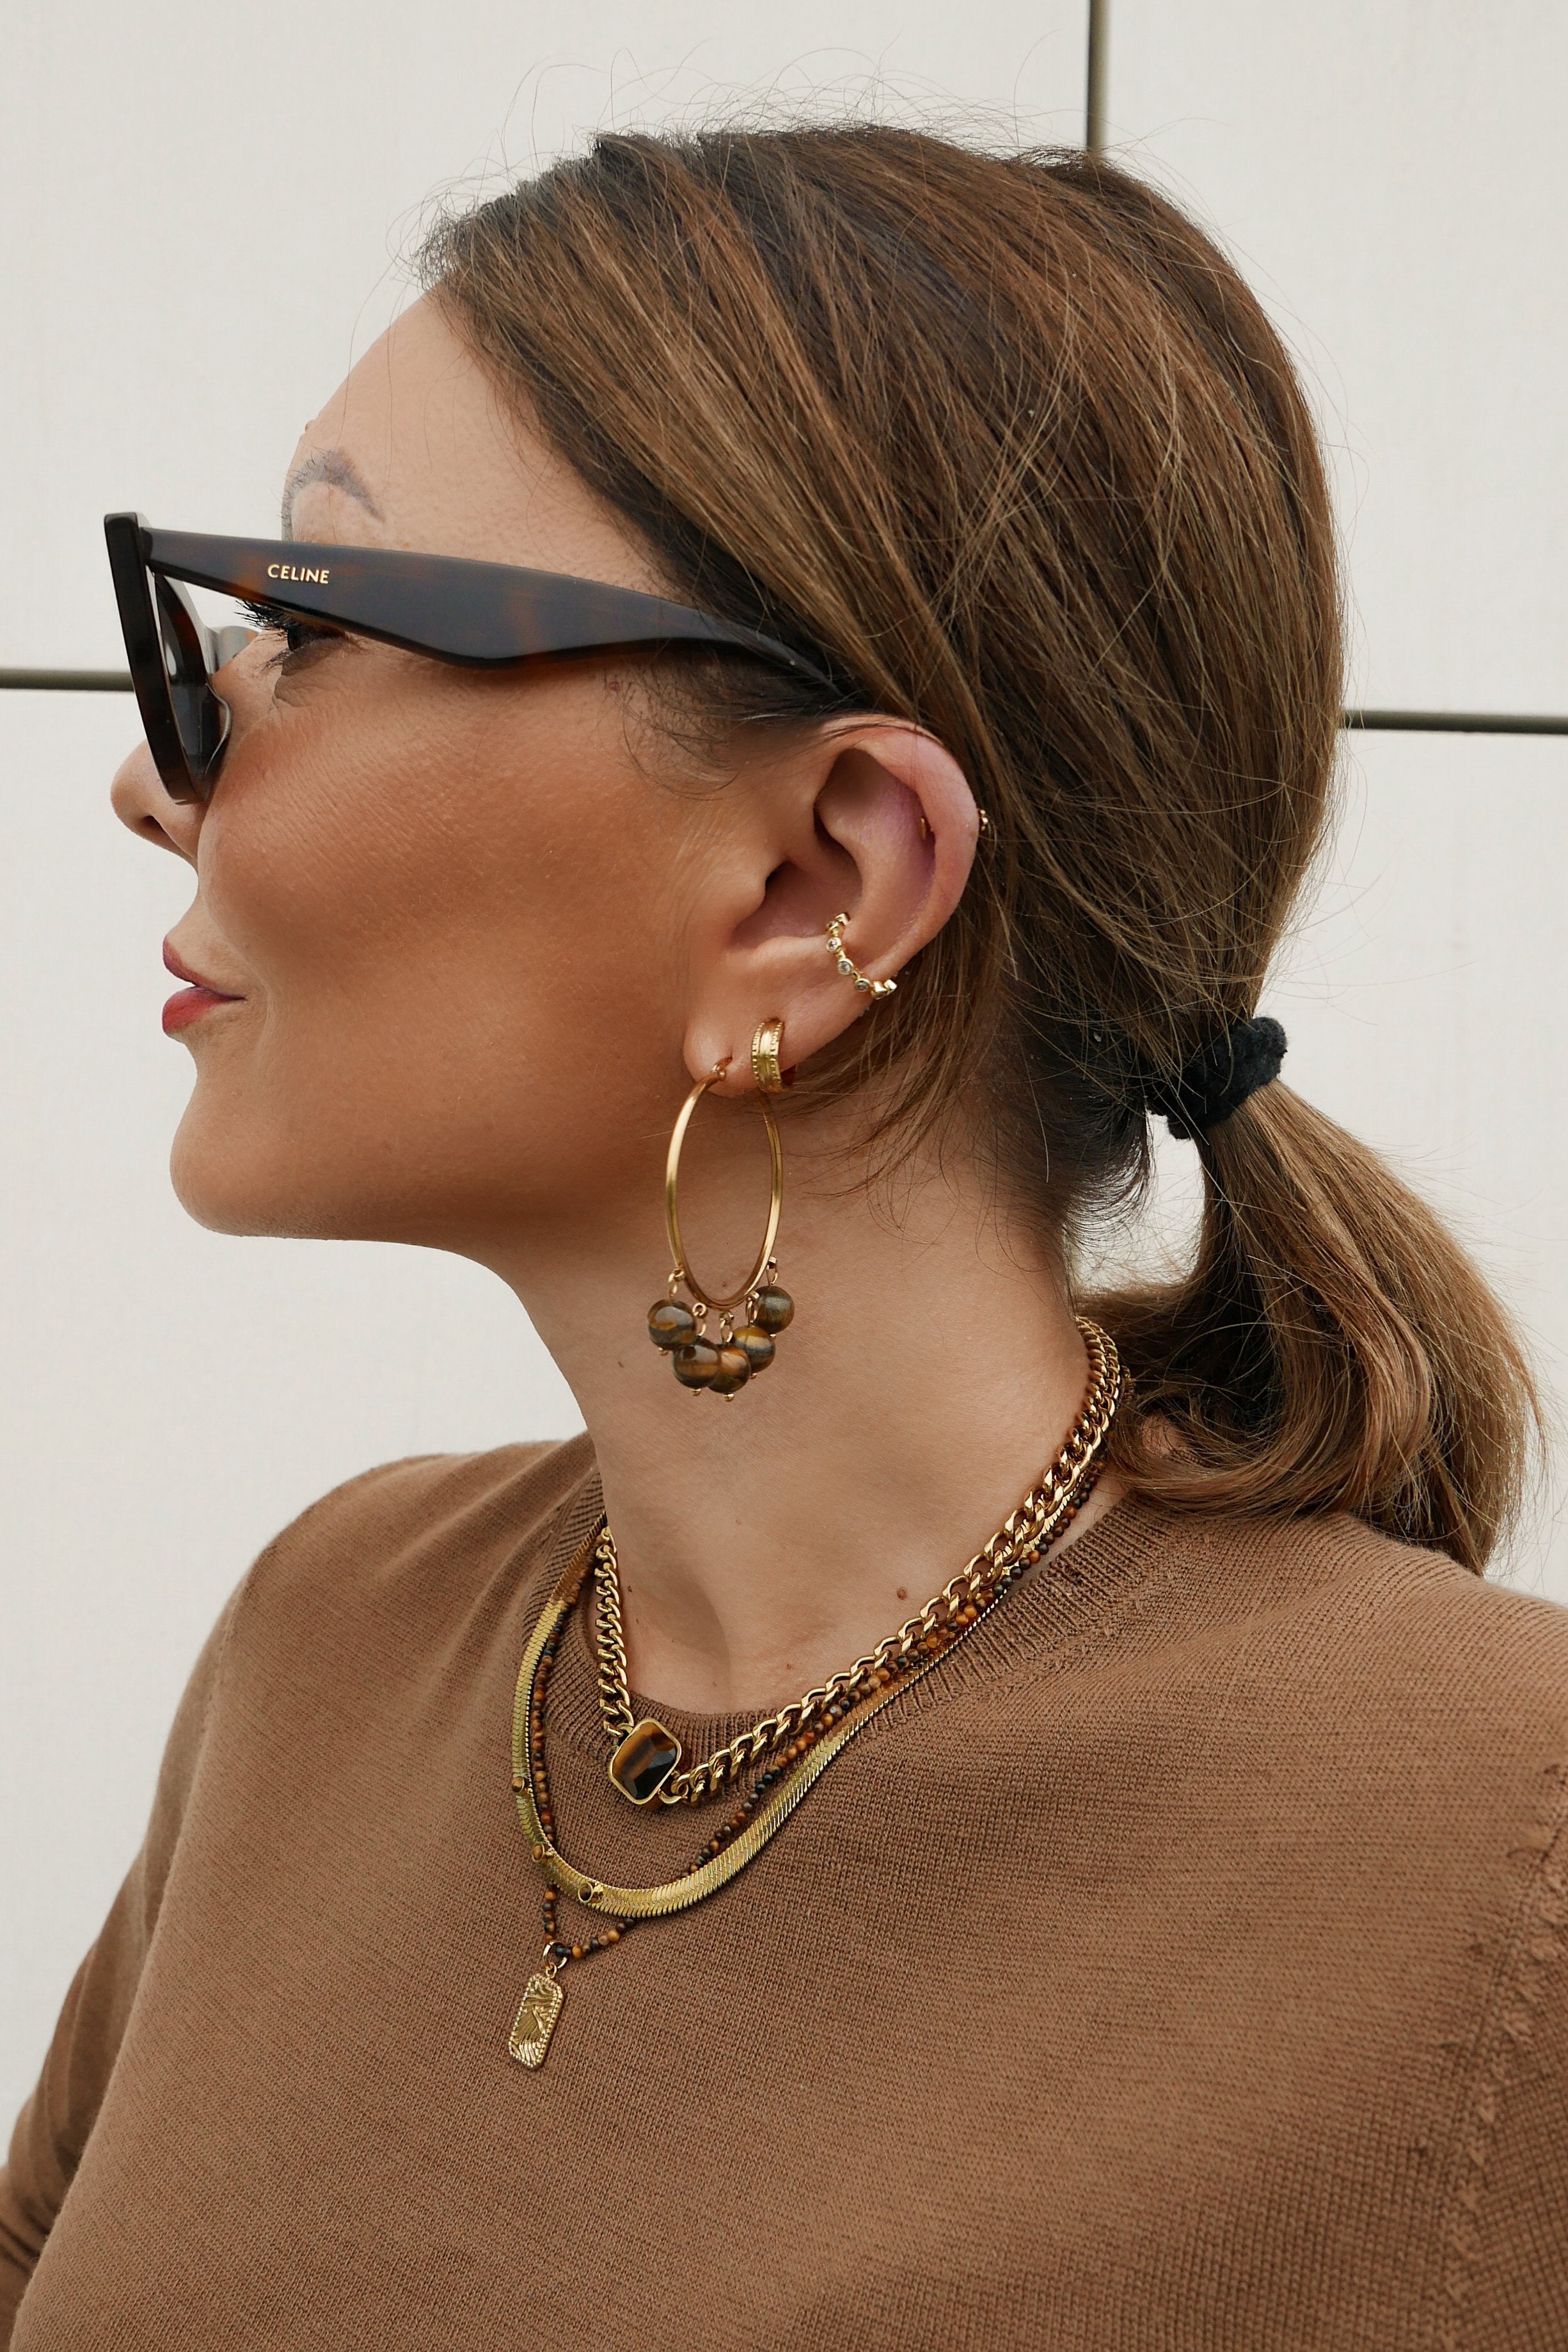 Hania Huggies - Boutique Minimaliste has waterproof, durable, elegant and vintage inspired jewelry